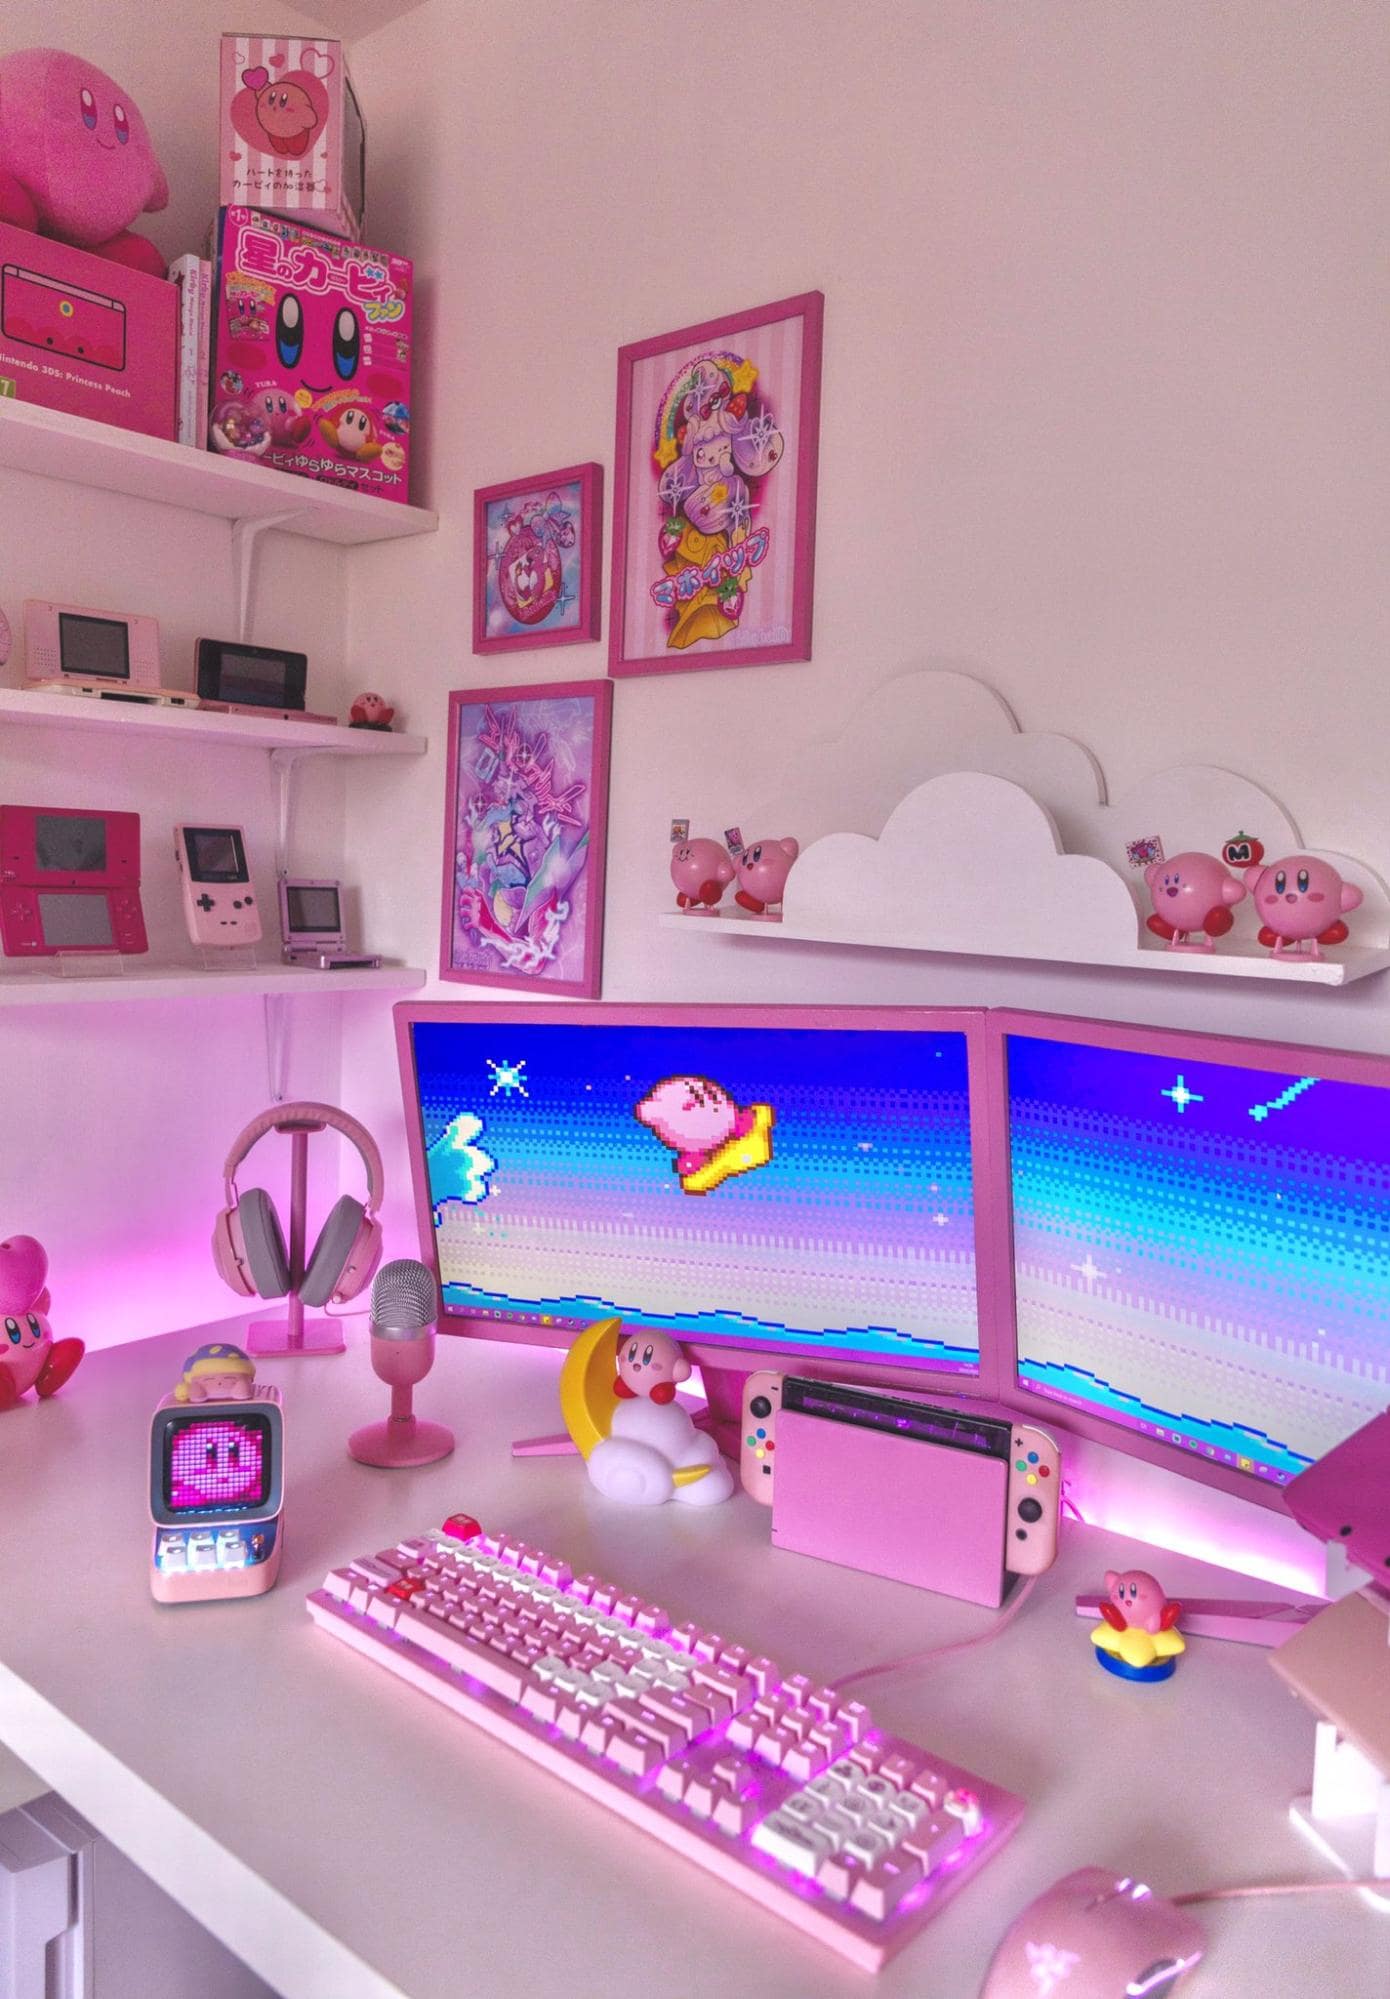 A pink dual monitor desk setup